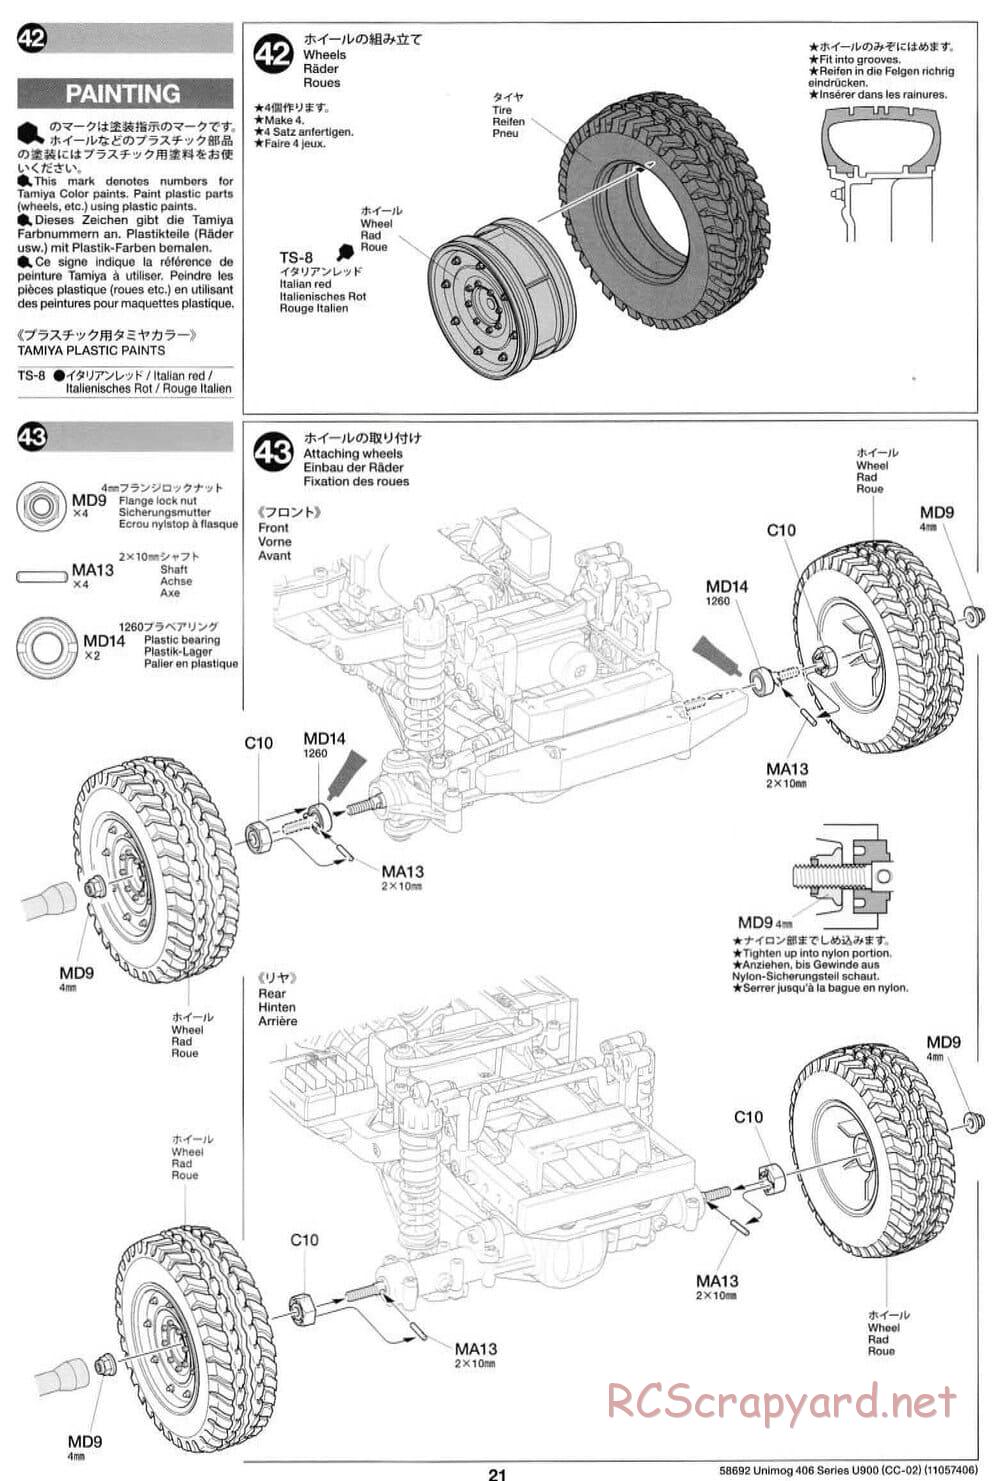 Tamiya - Mercedes-Benz Unimog 406 Series U900 - CC-02 Chassis - Manual - Page 21